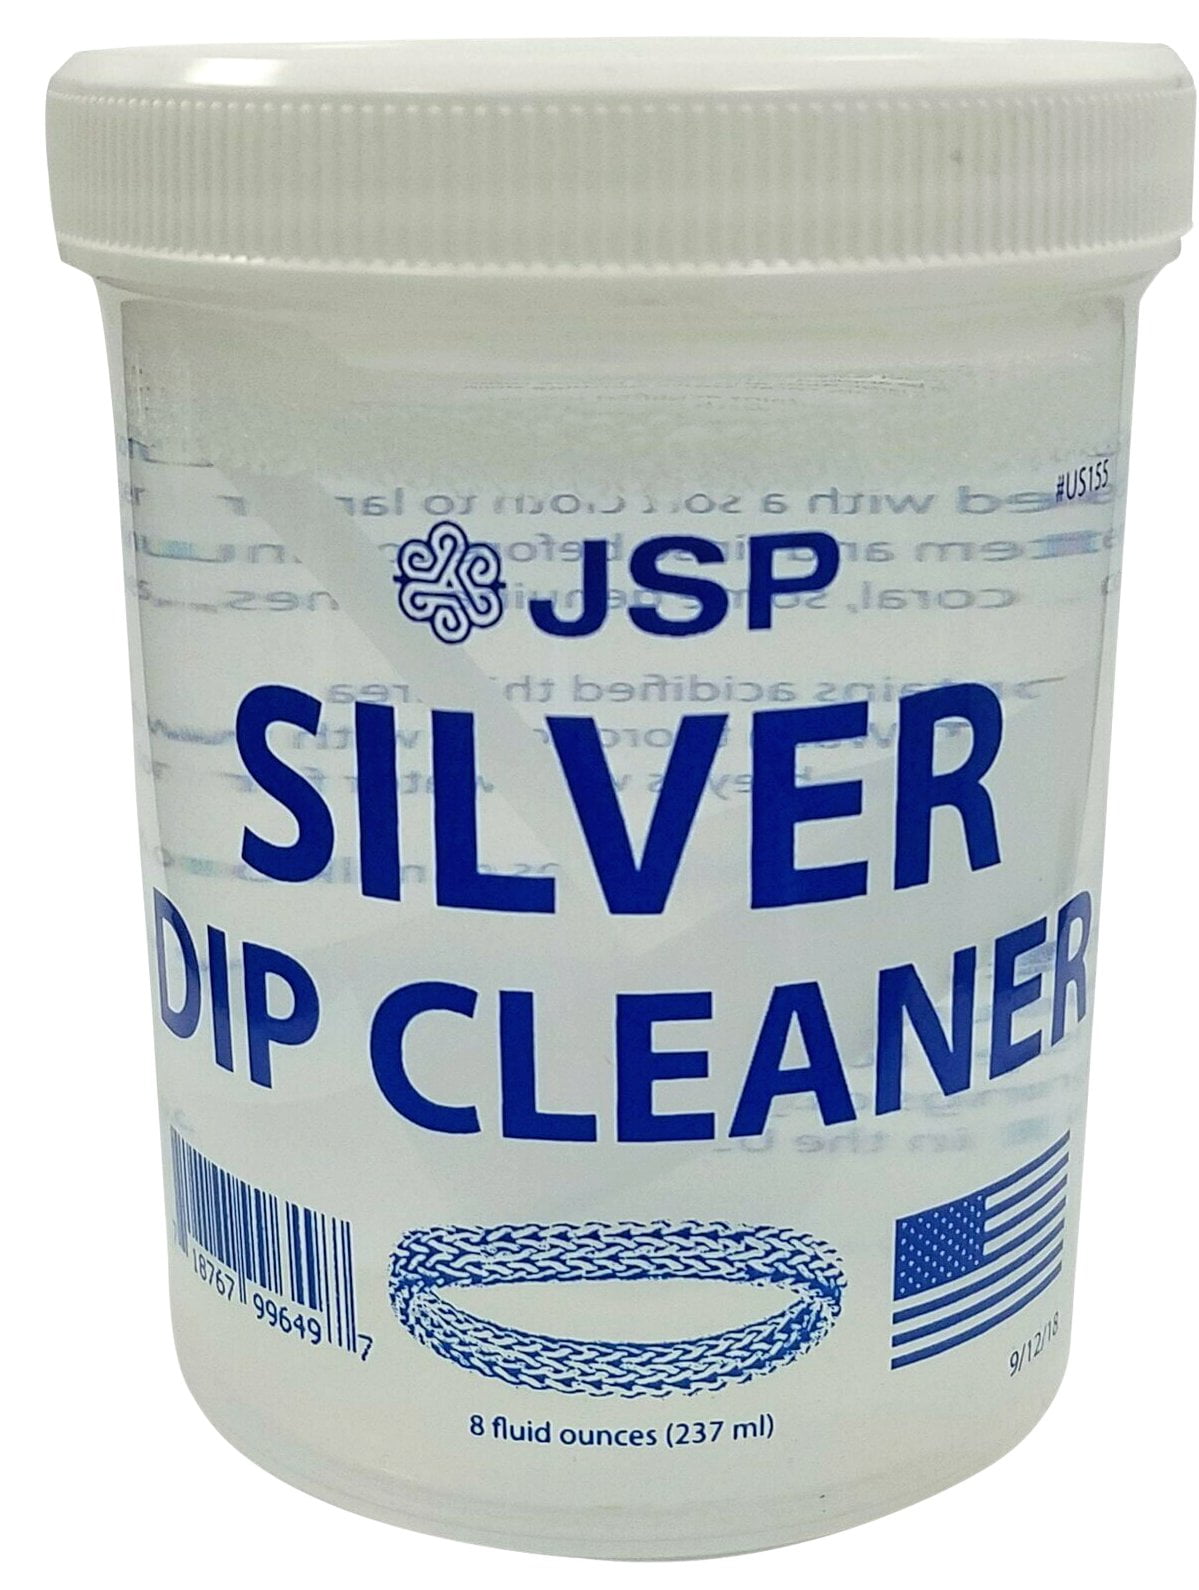 CL856 = Shinebrite Silver Dip 8oz Jar by FDJtool